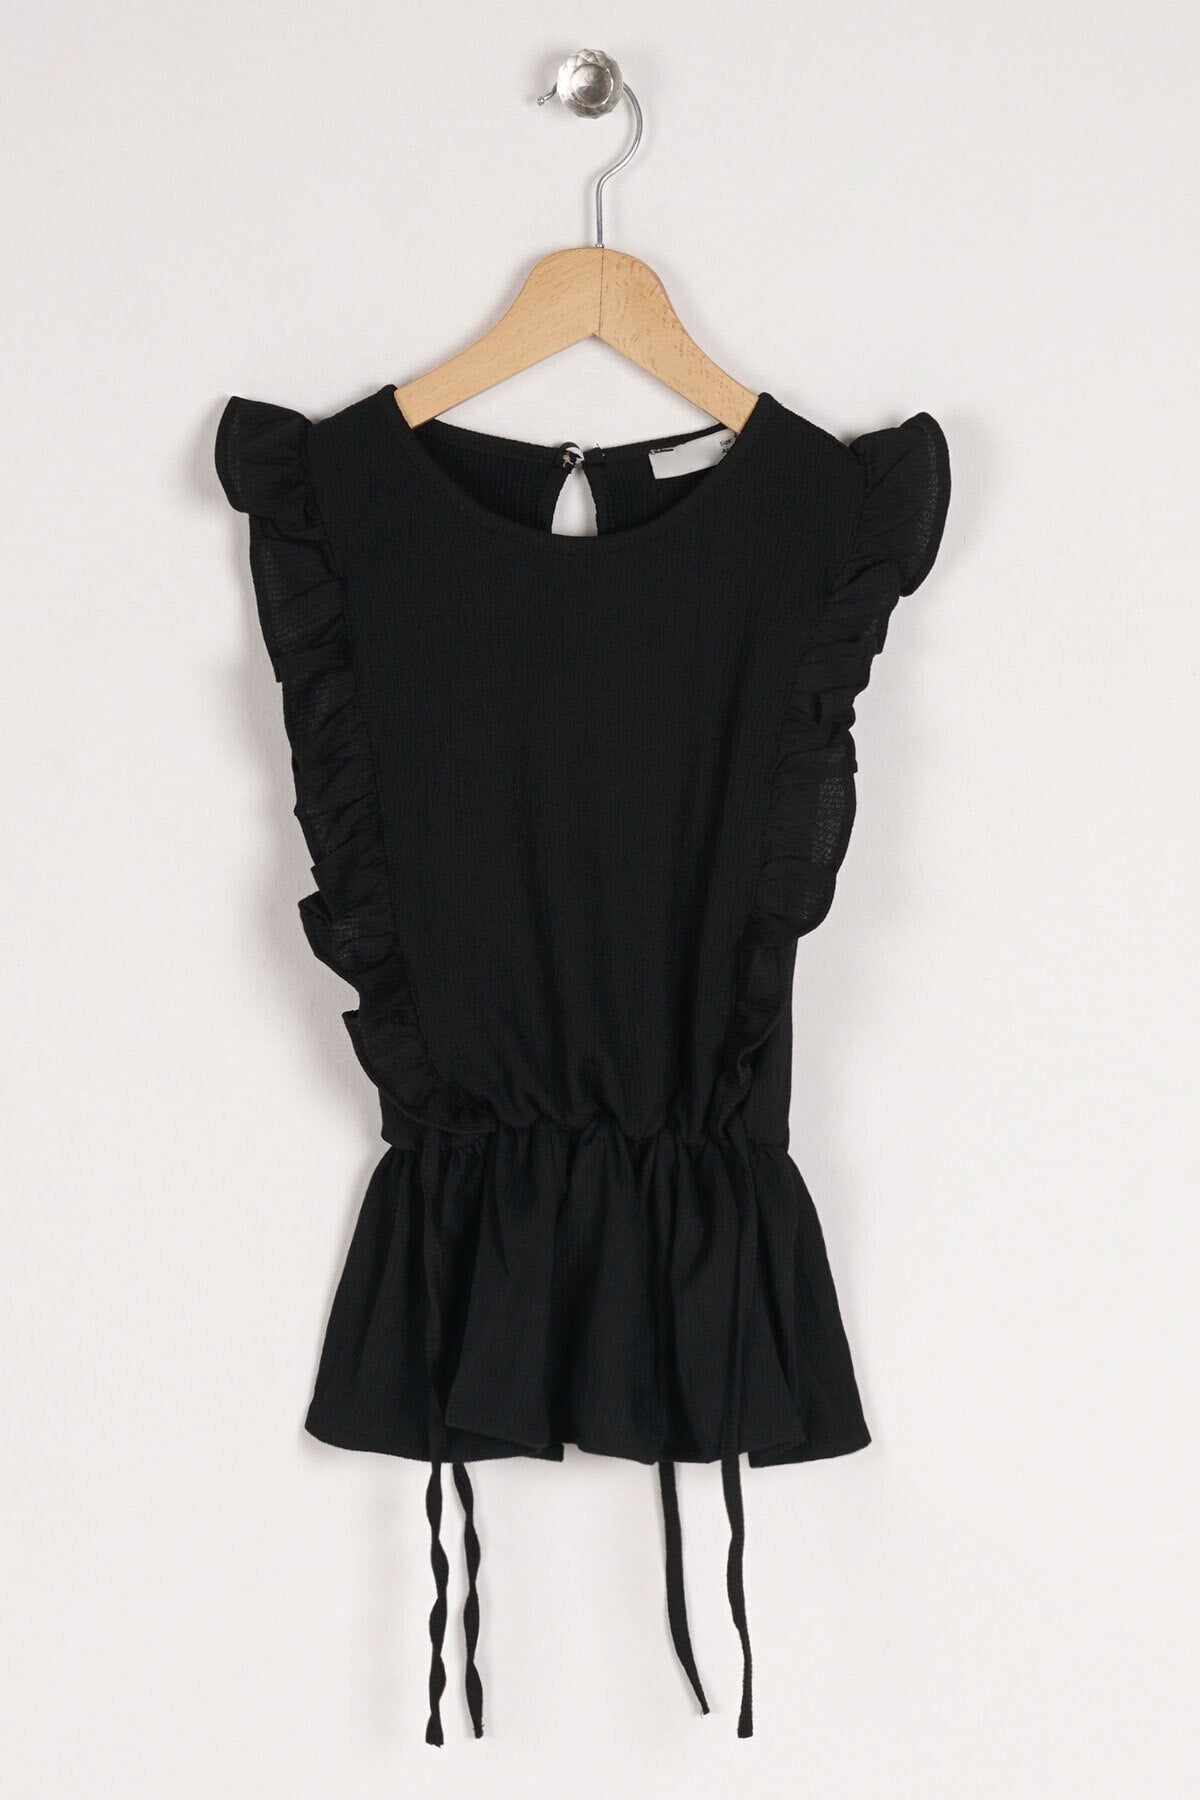 Girl's Black Color Frilly Waist Elastic Detailed T-Shirt